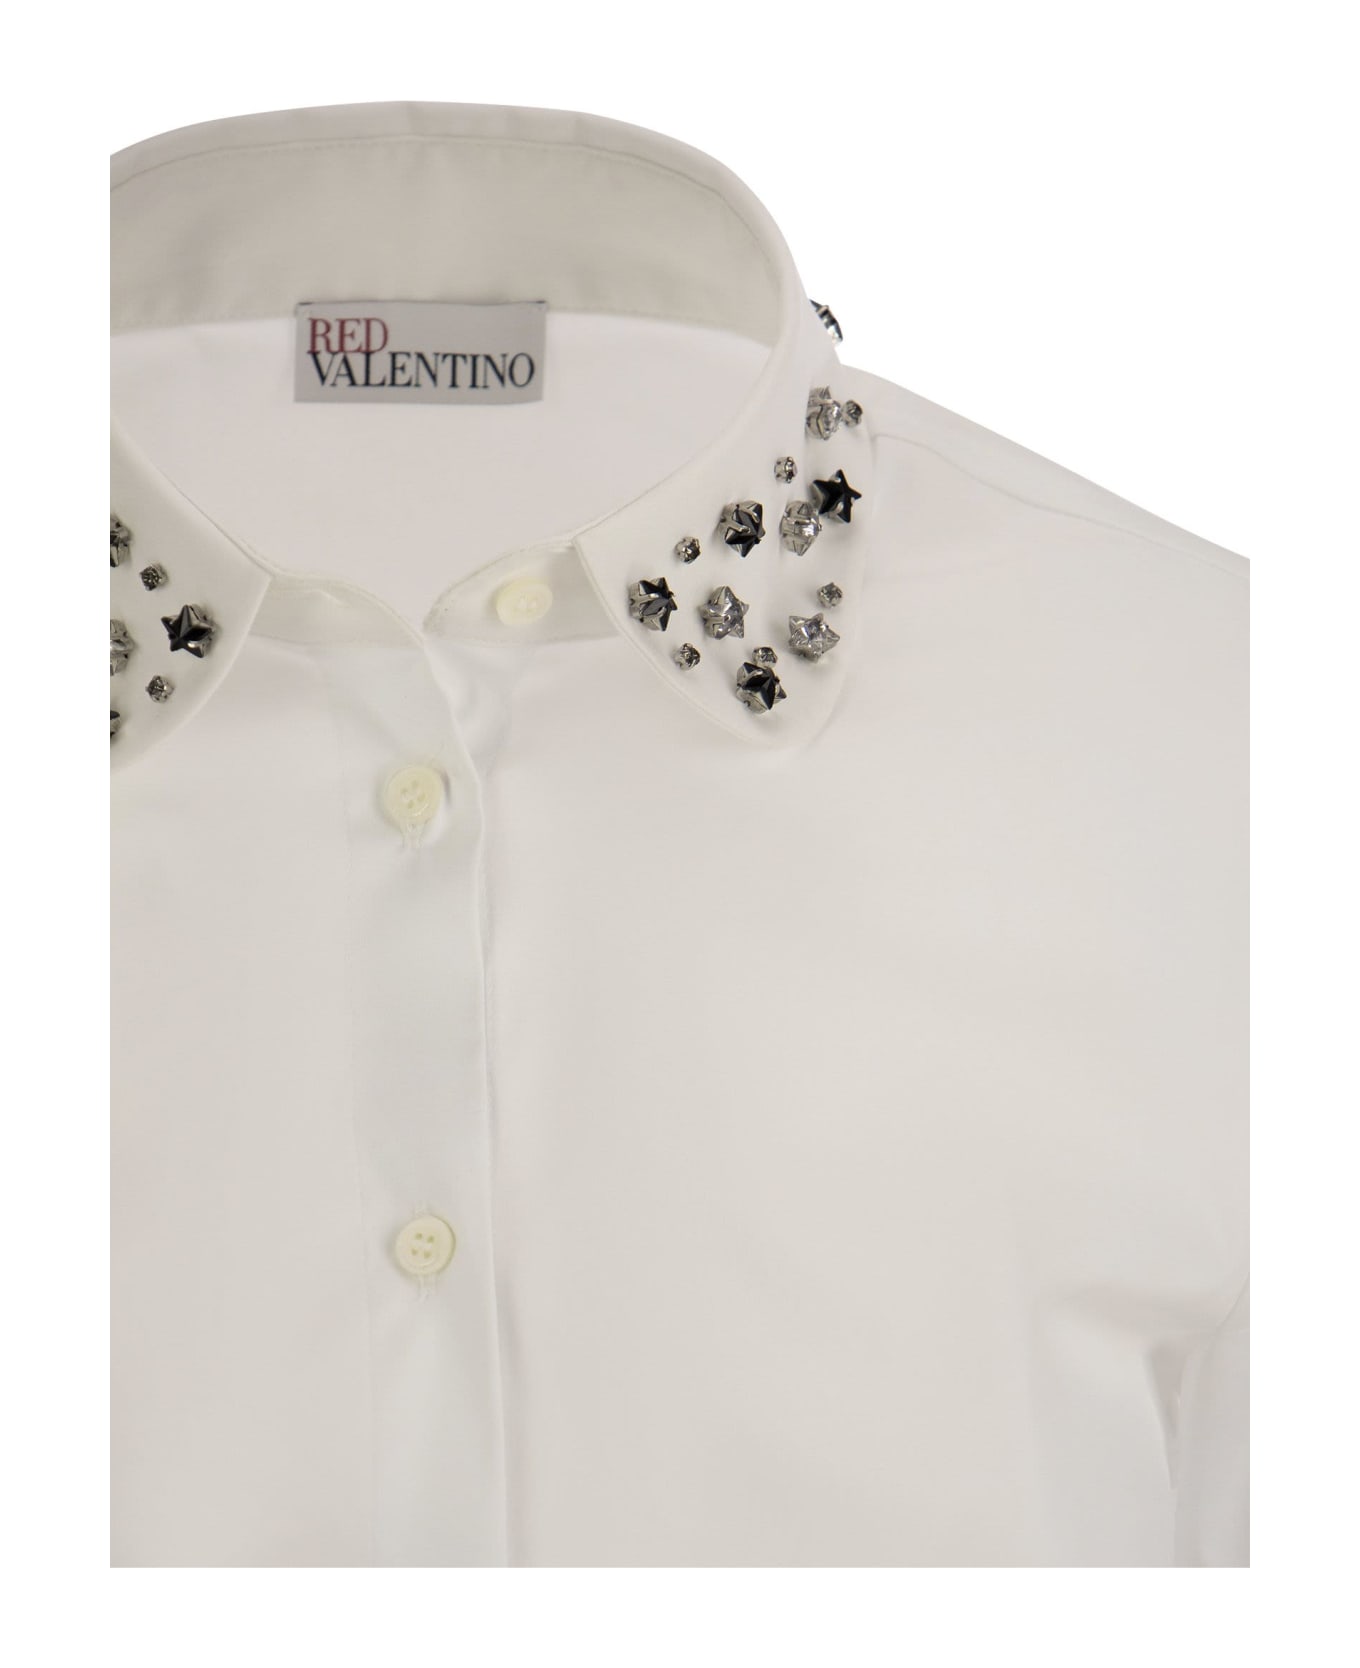 RED Valentino Shirt In White Cotton - White